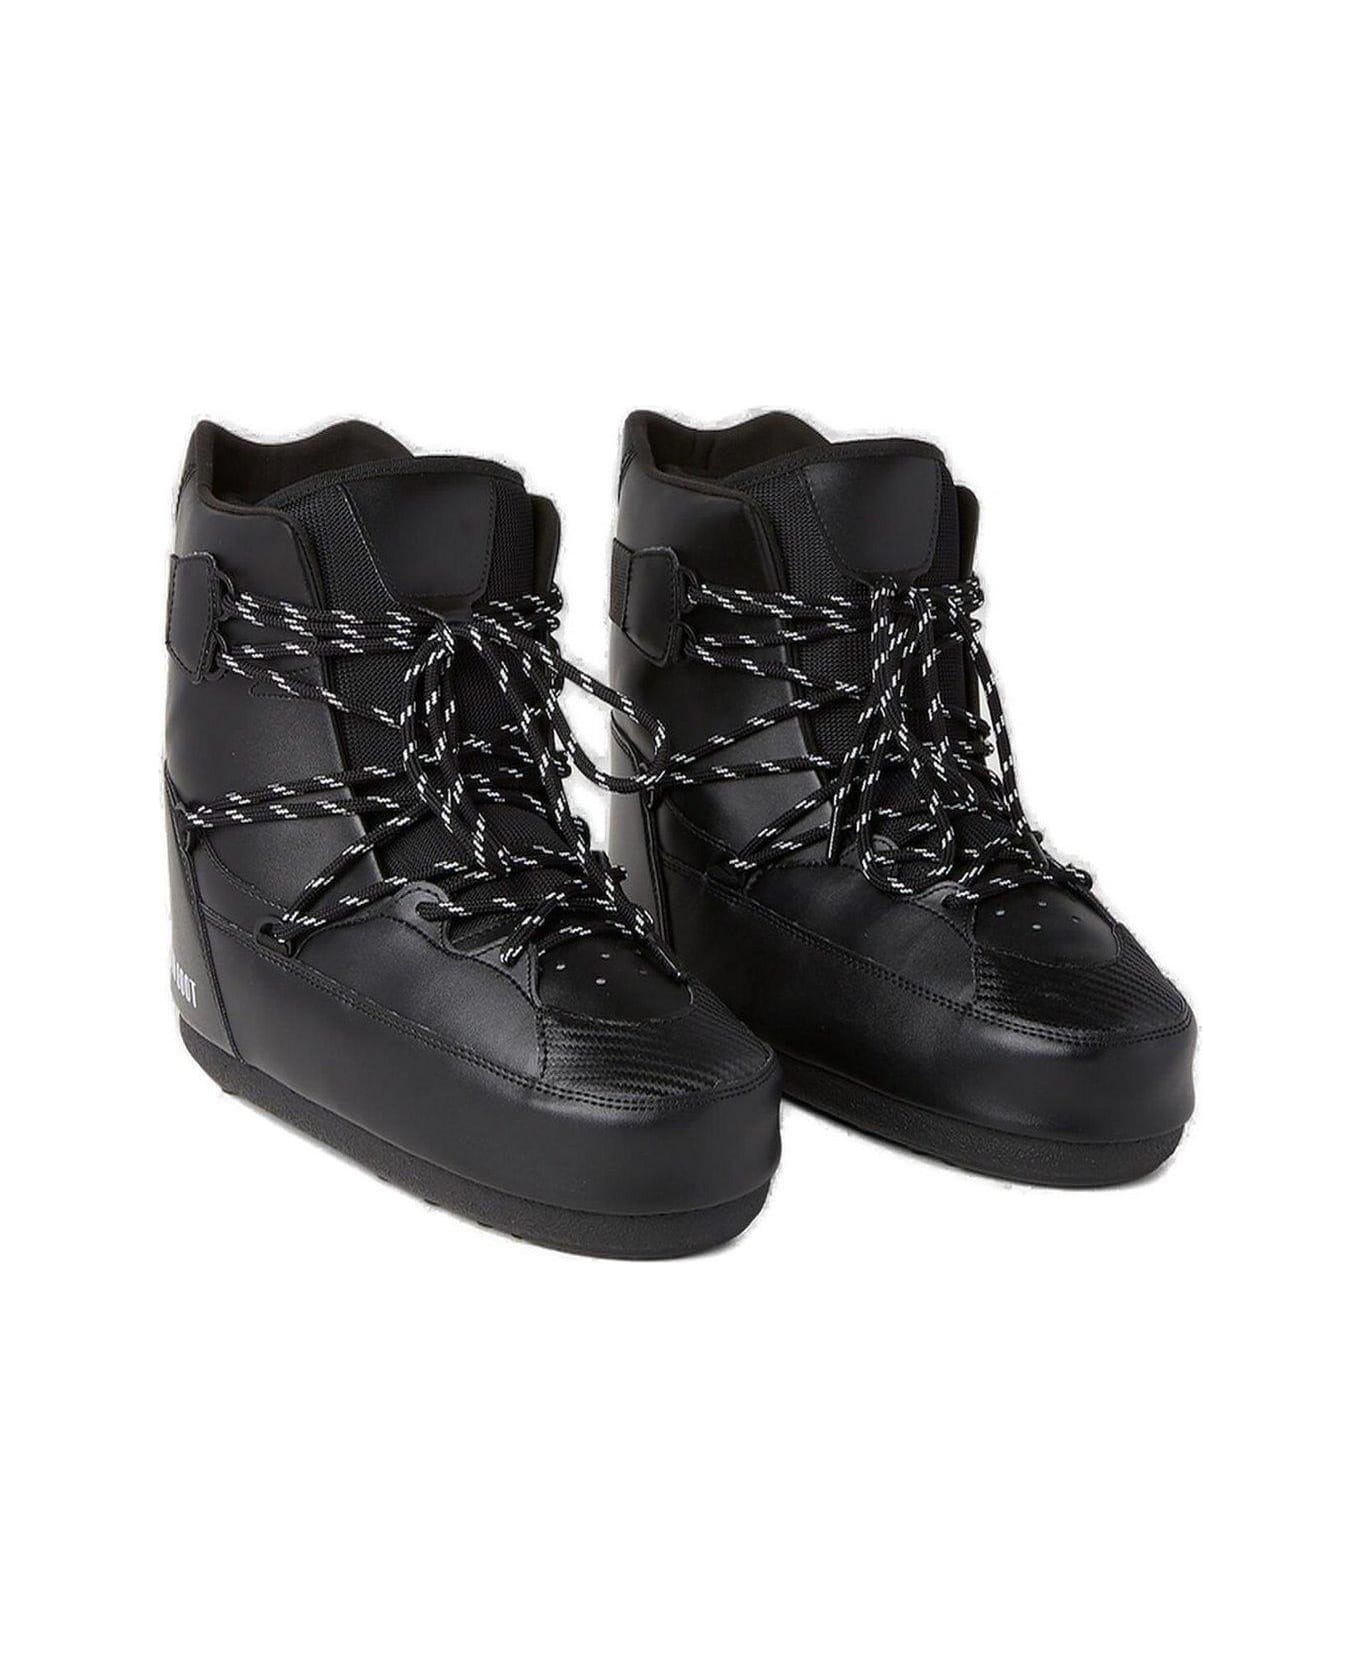 Moon Boot Sneaker Mid Snow Boots - BLACK ウェッジシューズ